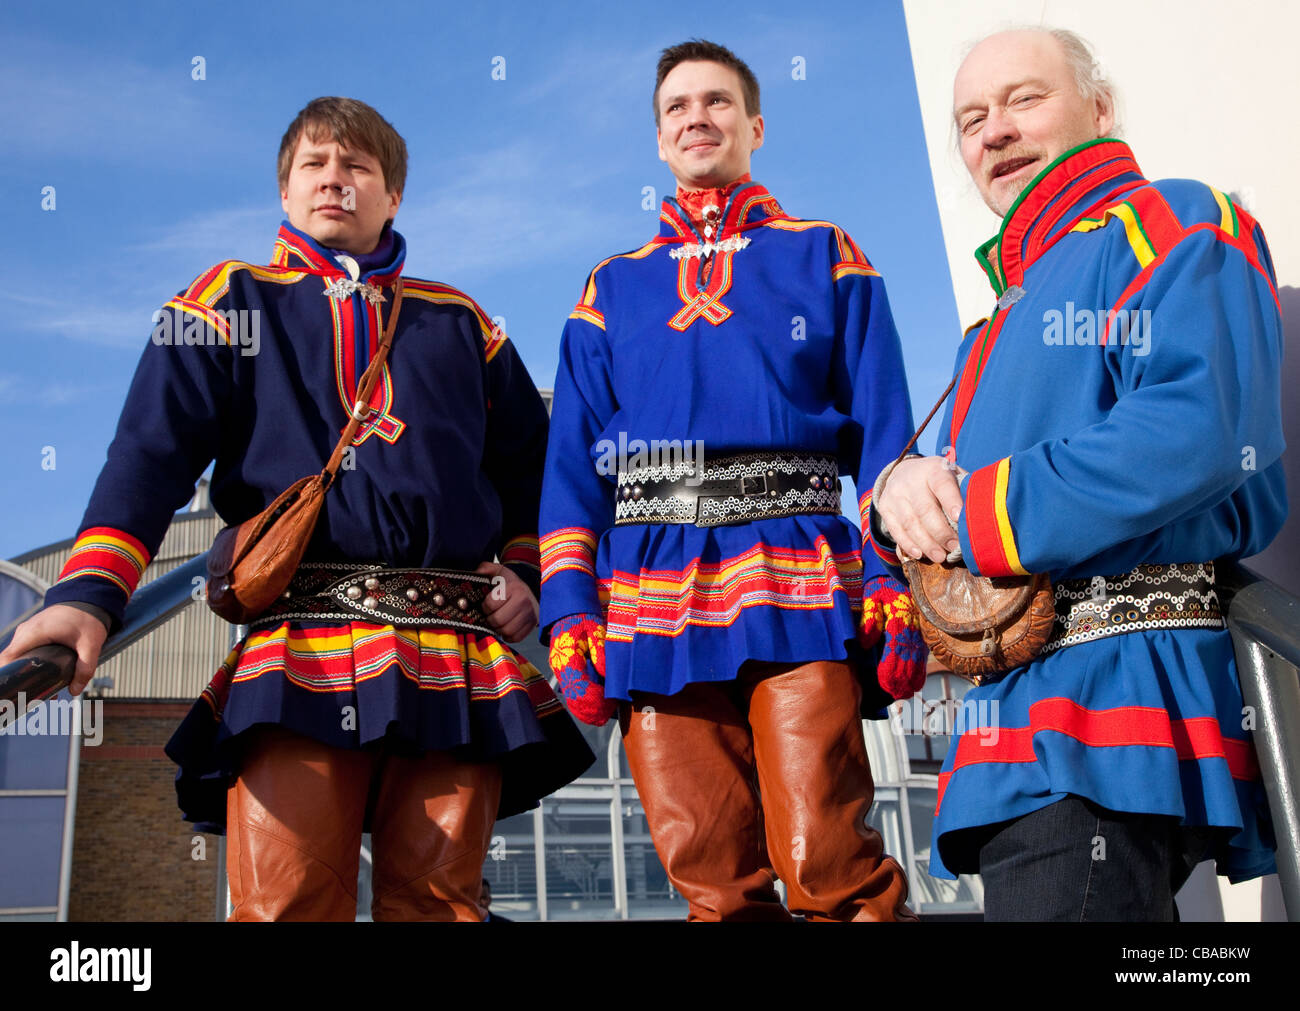 Saami Clothing